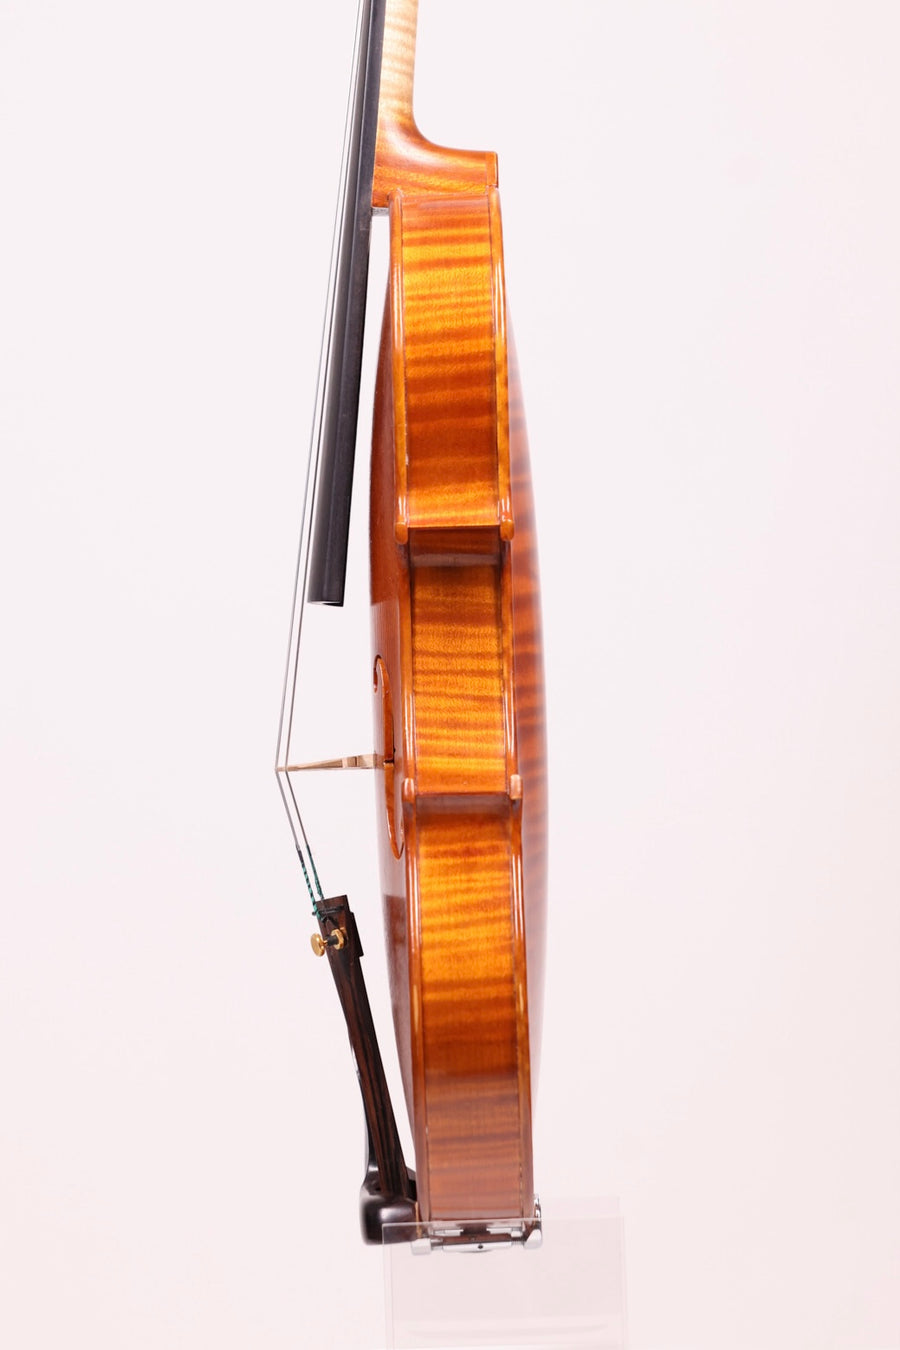 A Modern Cremonese Violin By Marco Maria Gastaldi